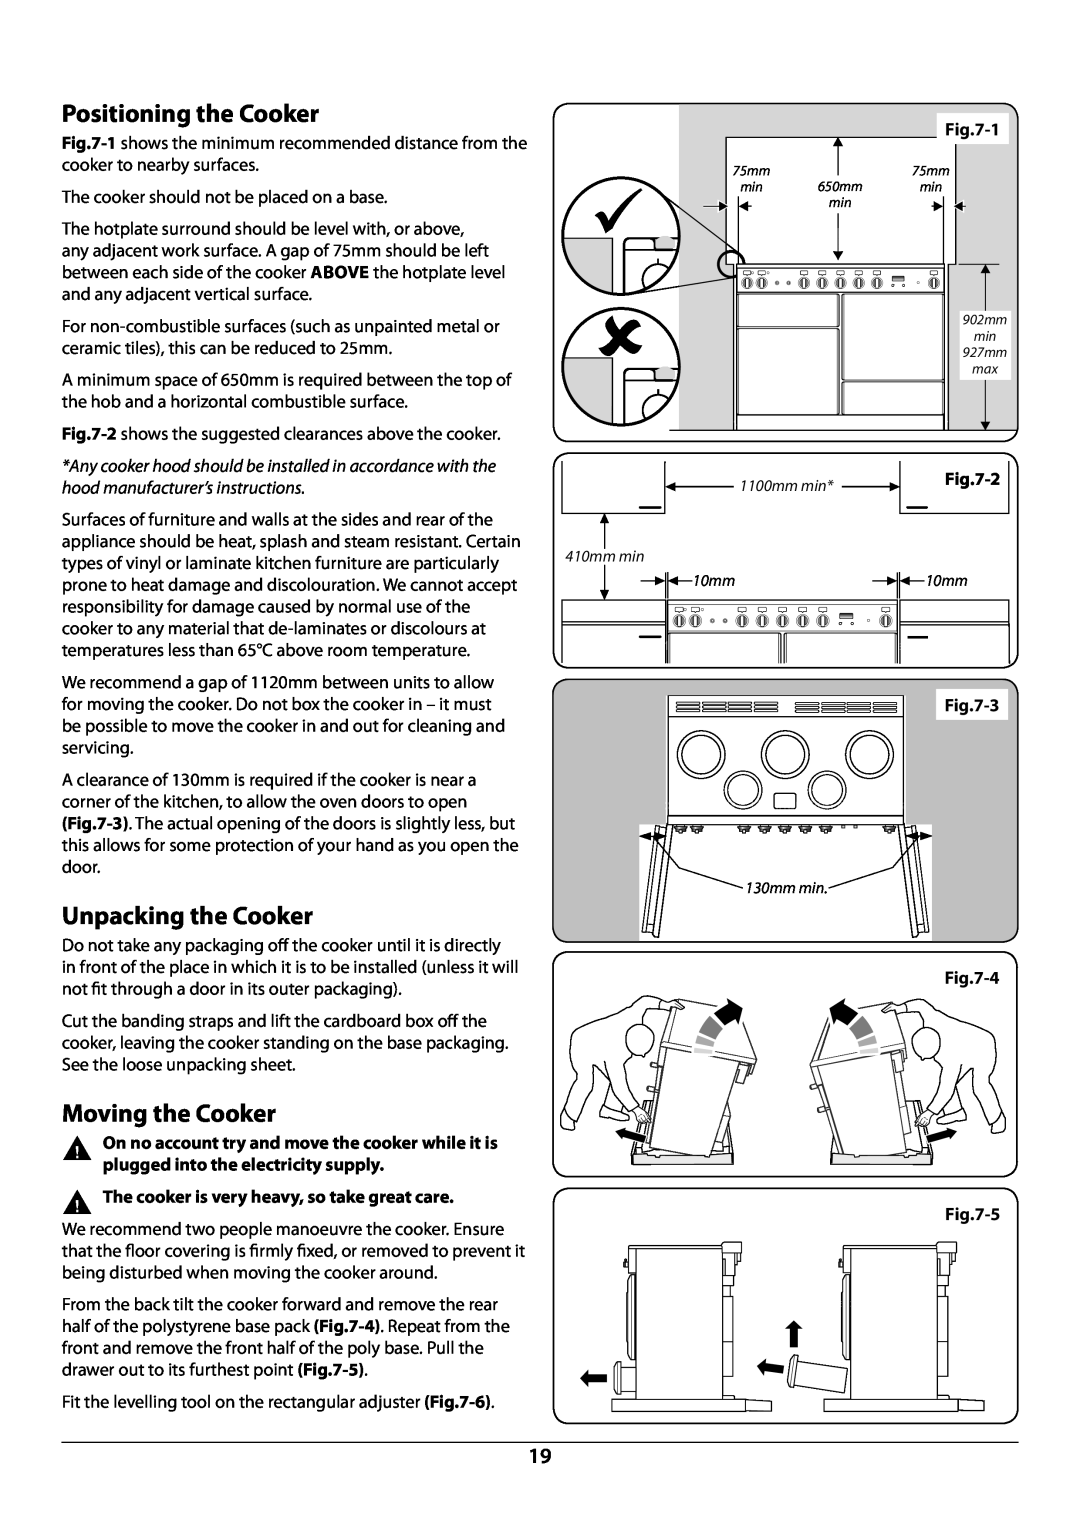 Rangemaster U109948 - 04 manual Positioning the Cooker, Unpacking the Cooker, Moving the Cooker, 3 